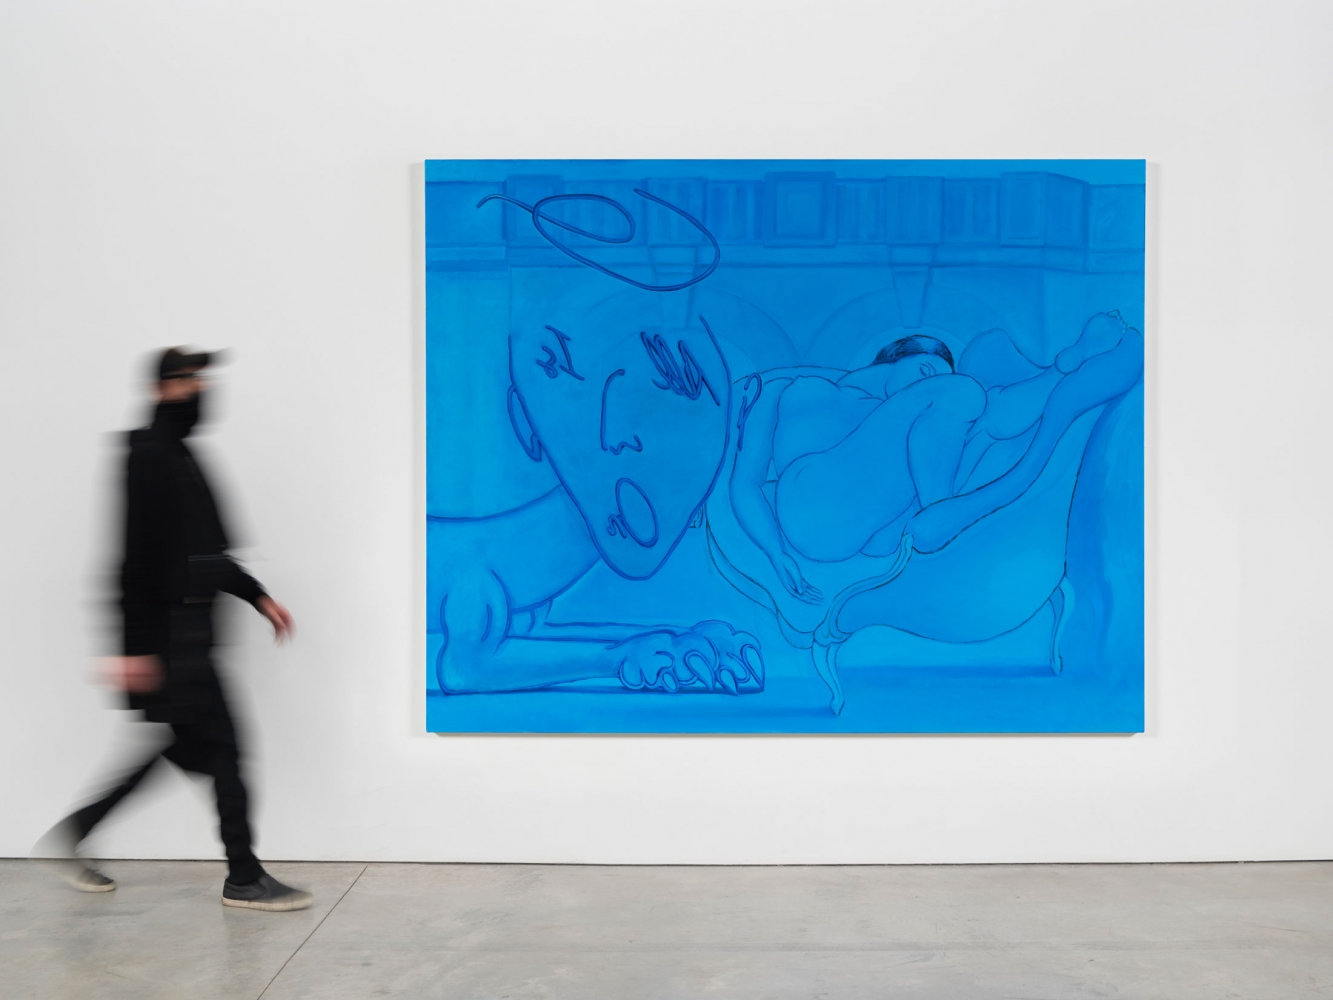 Allison Katz
NO SI LLA, 2020
Oil on canvas
78 3/4 x 98 3/8 inches
(200 x 250 cm)